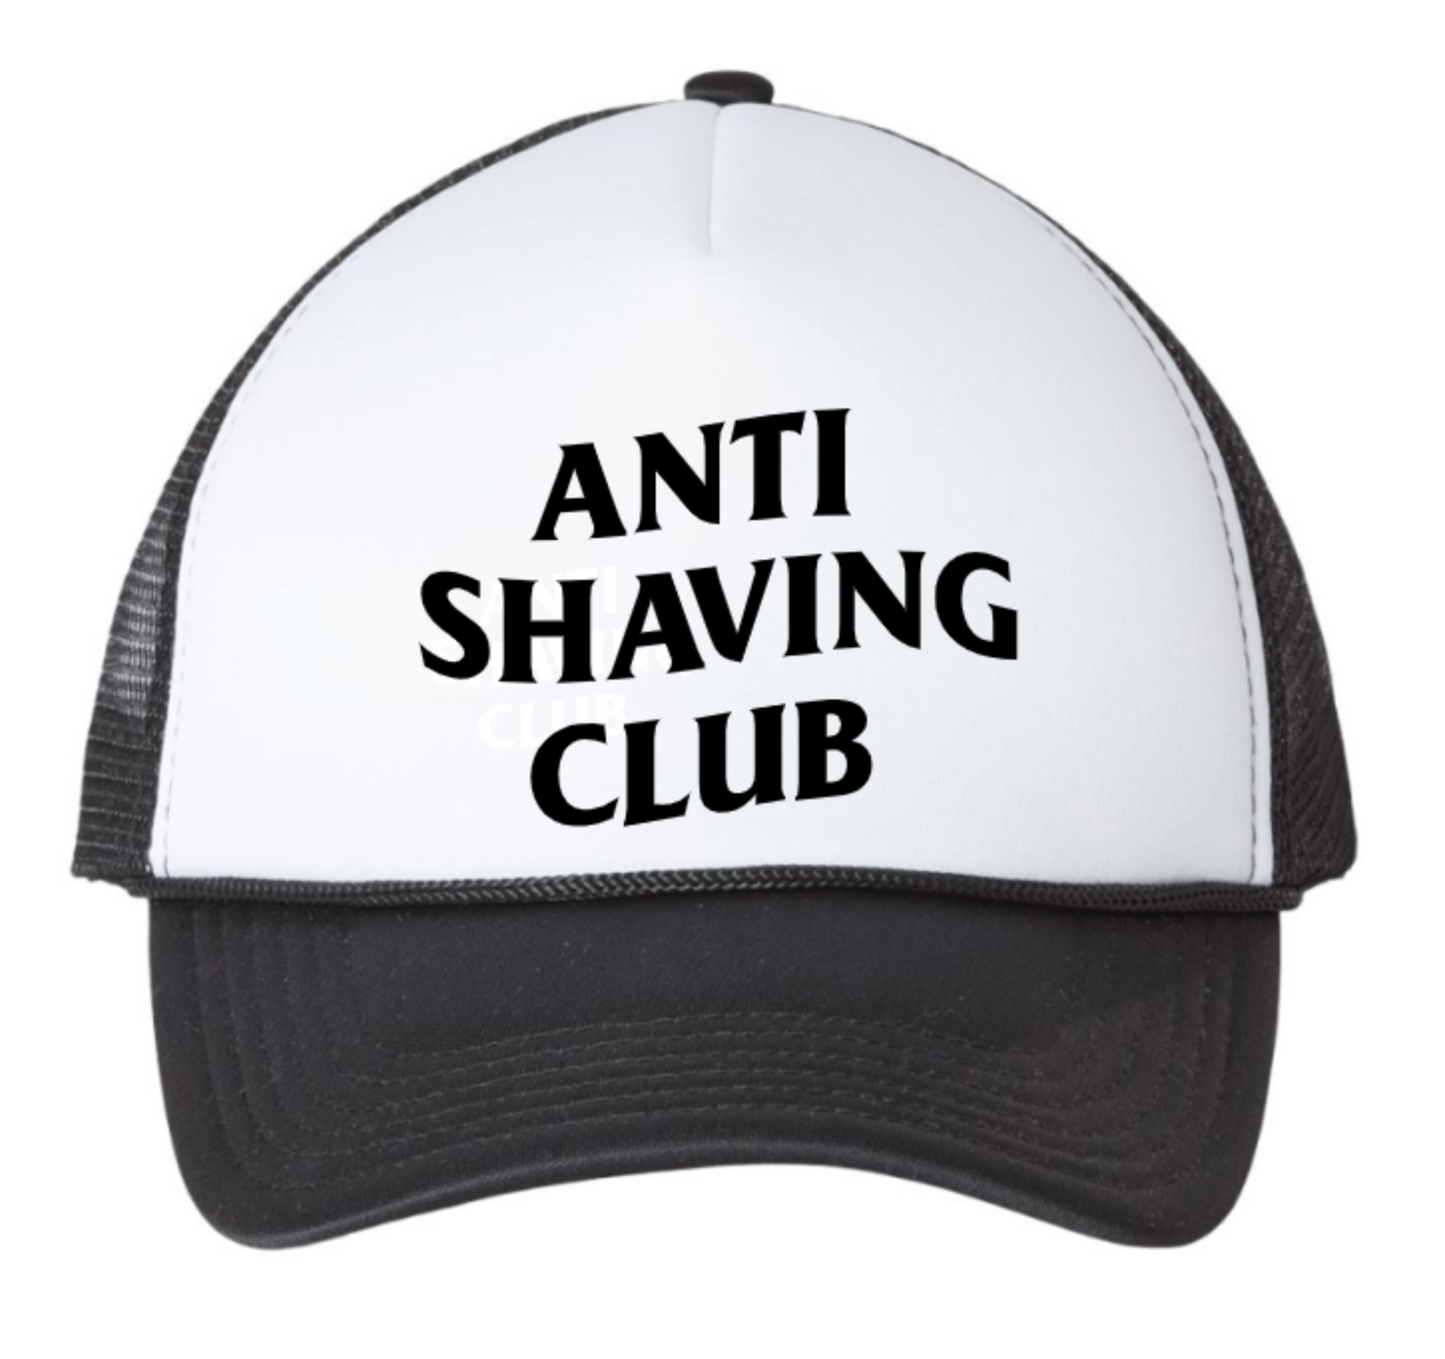 ANTI SHAVING CLUB HAT